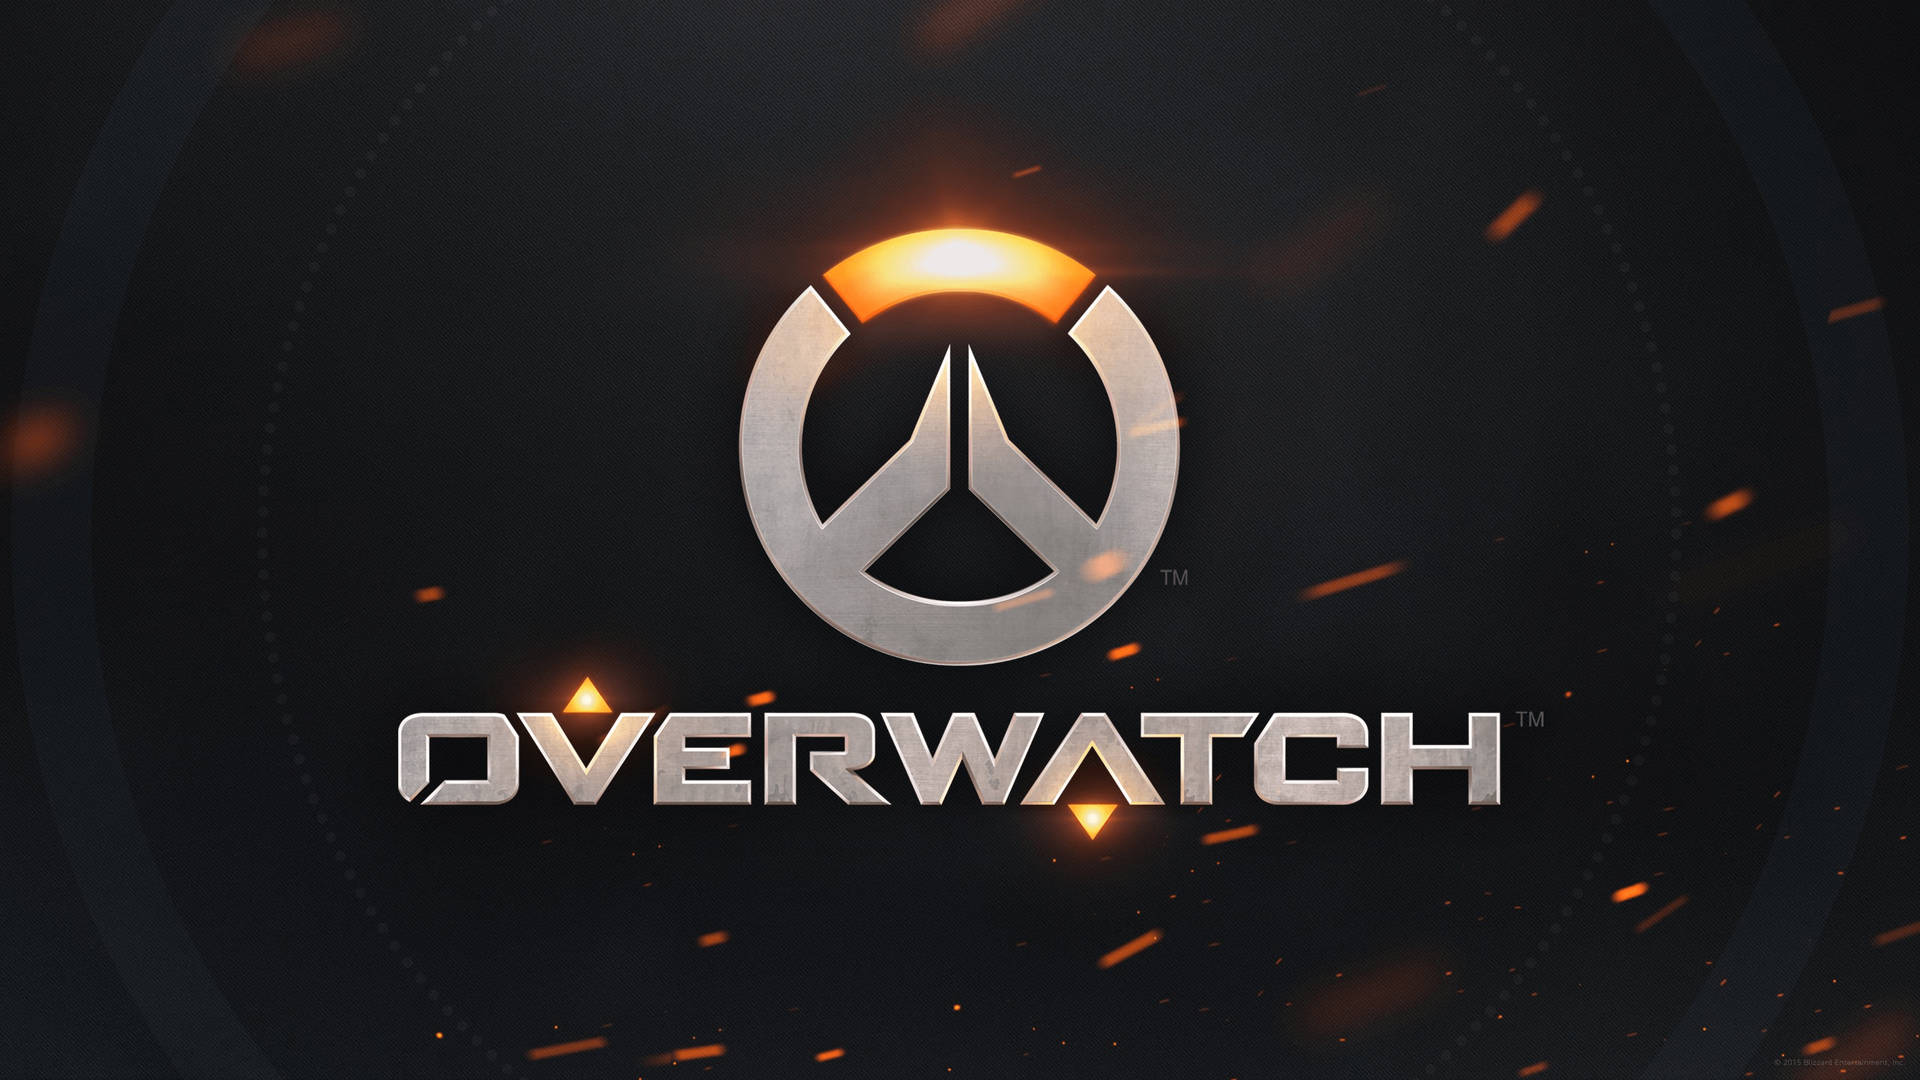 Overwatch Amazing Logo Design Background